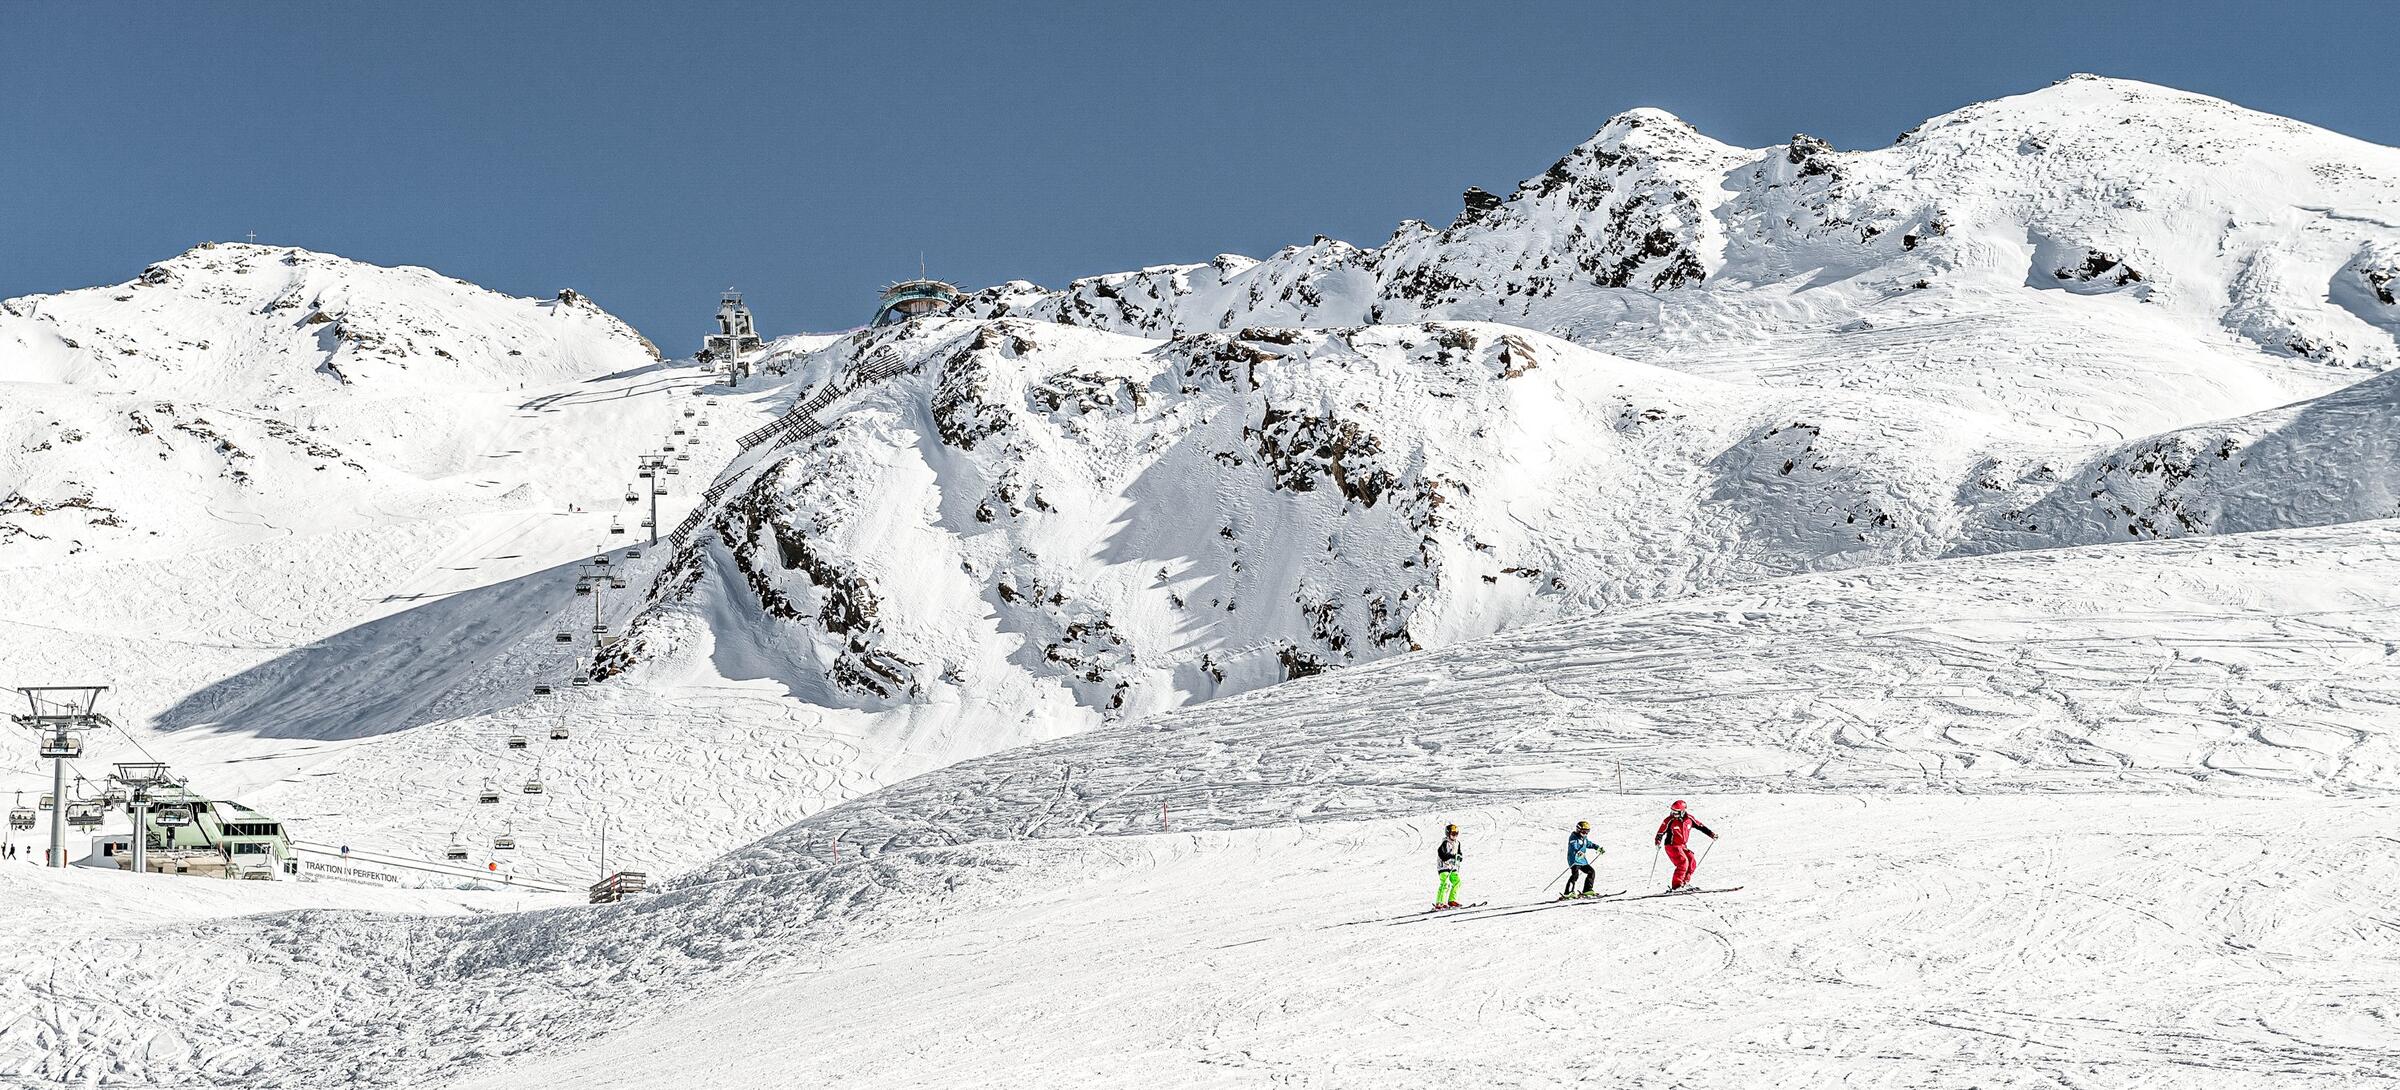 skifahren obergurgl-hochgurgl   | © Alexander Maria Lohmann